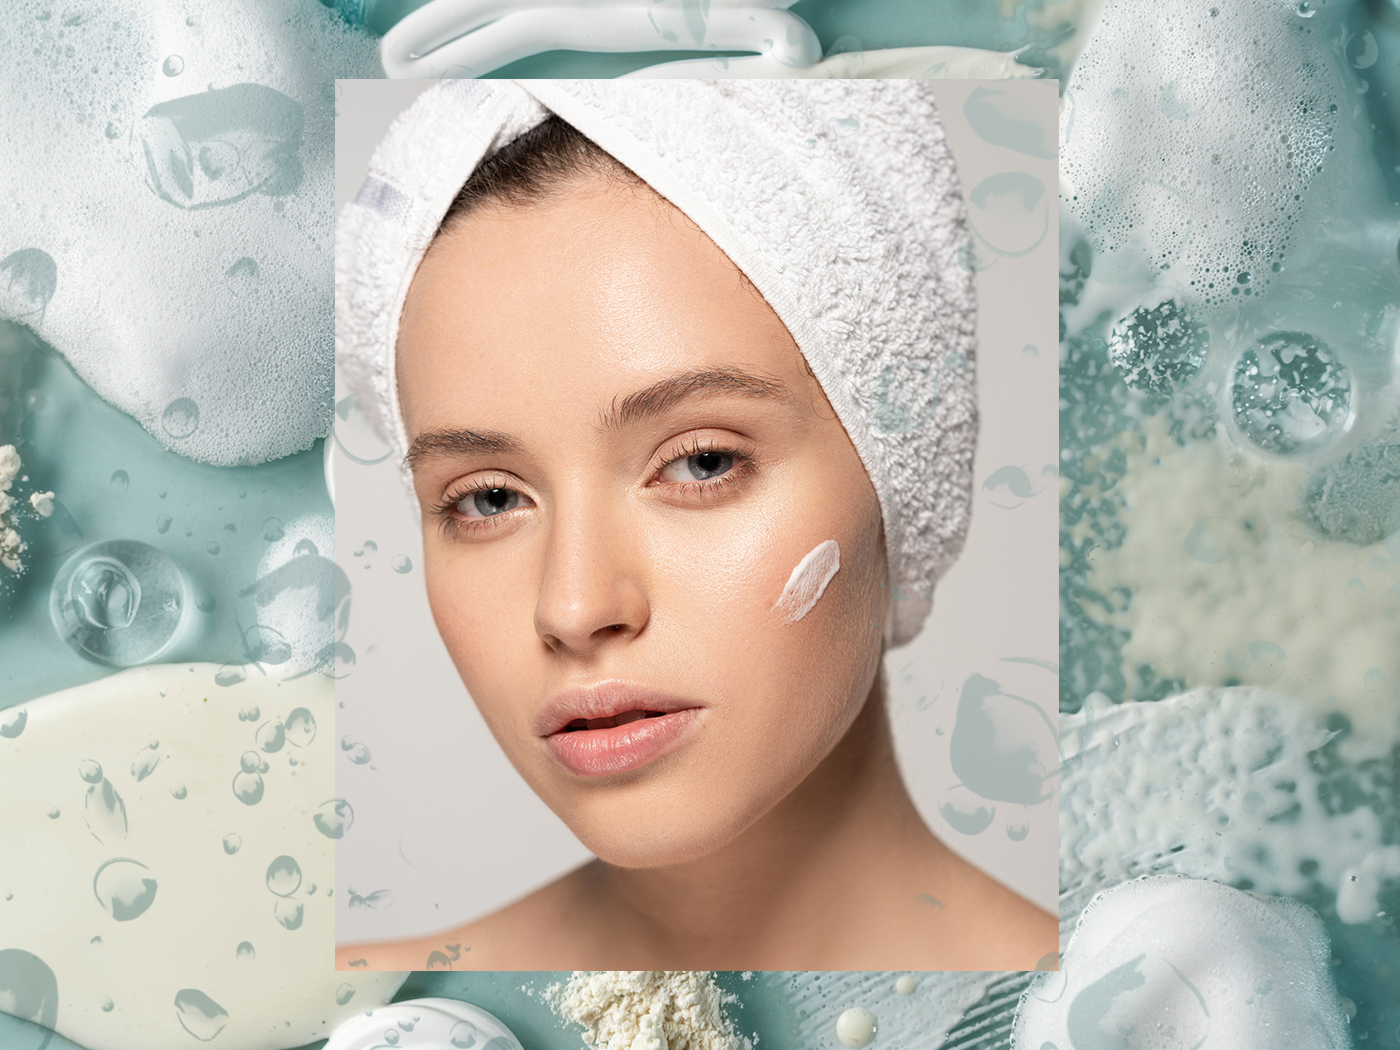 Skincare Smoothie: Η νέα τάση στην περιποίηση που θέλει να αναμειγνύεις όλα τα προϊόντα πριν την εφαρμογή